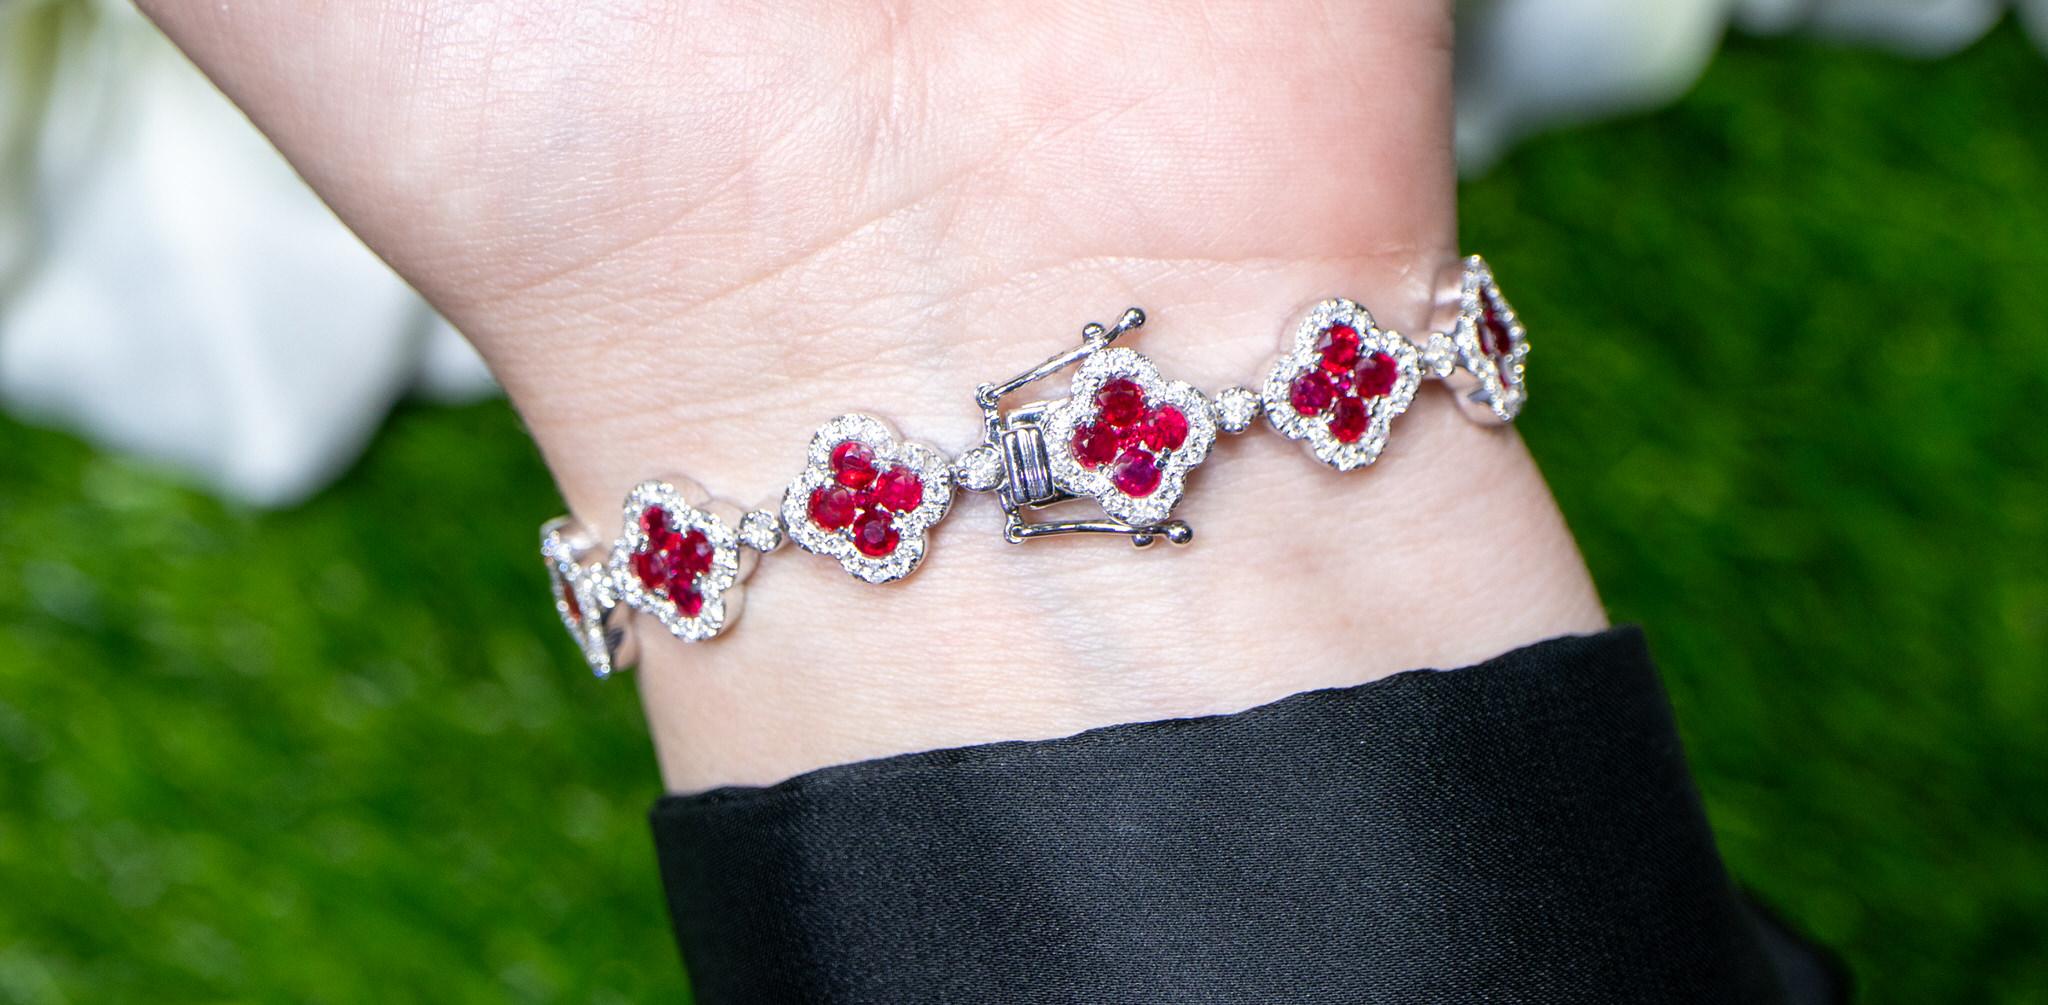 Clover Ruby Bracelet Diamond Links 8.5 Carats 18K White Gold For Sale 1